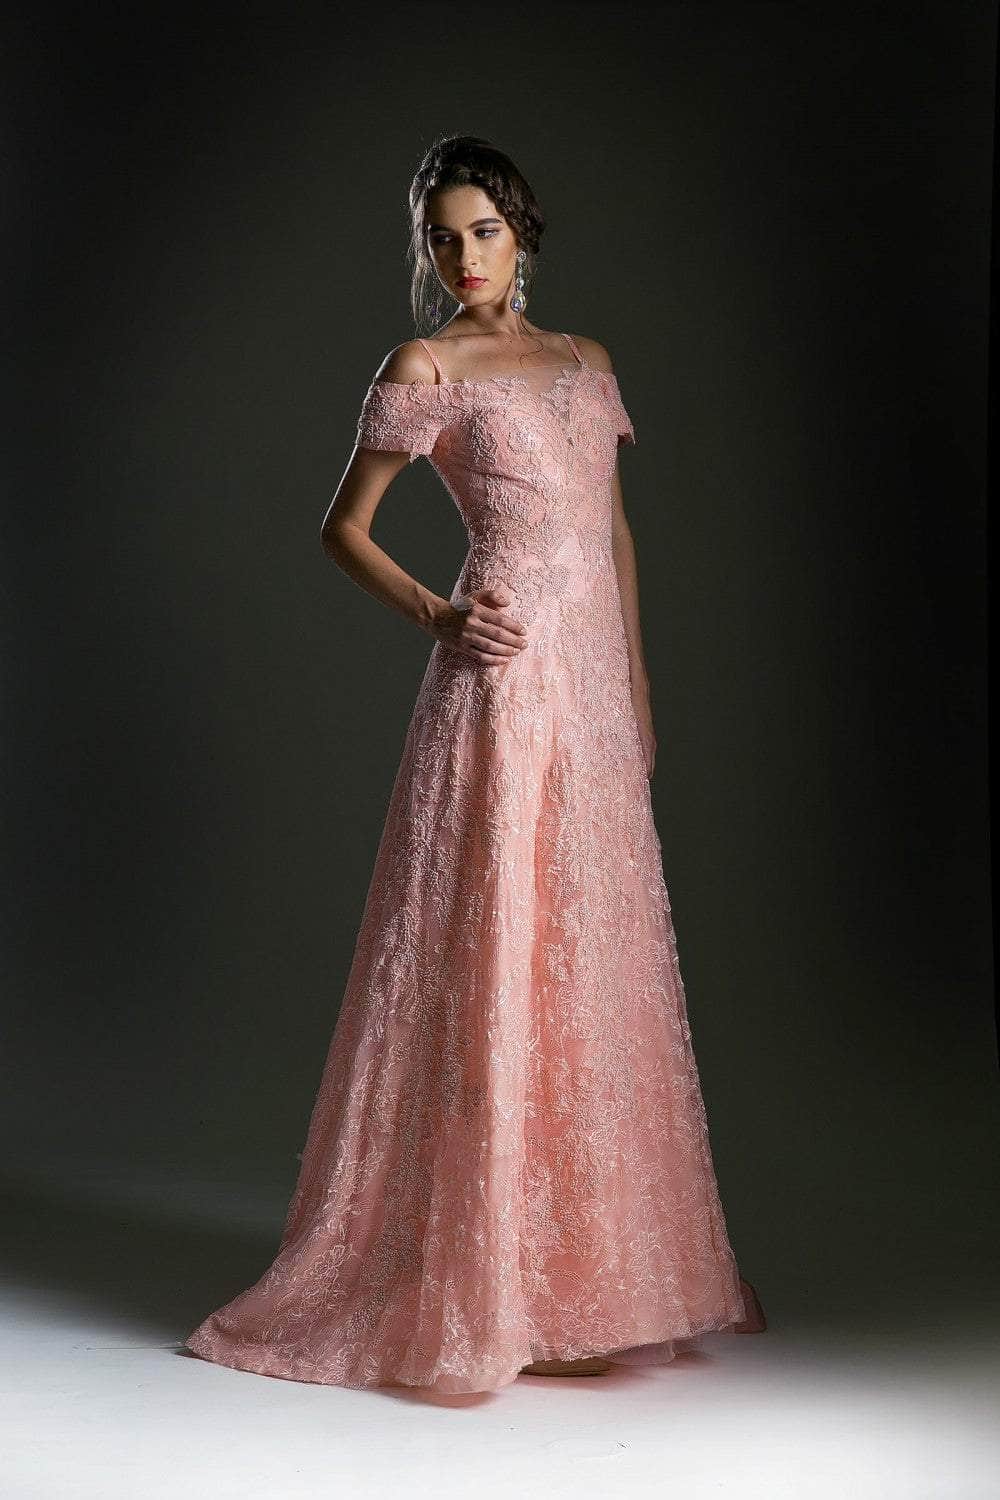 Cinderella Divine 5326 - Cold Shoulder Floral Lace Gown Special Occasion Dress